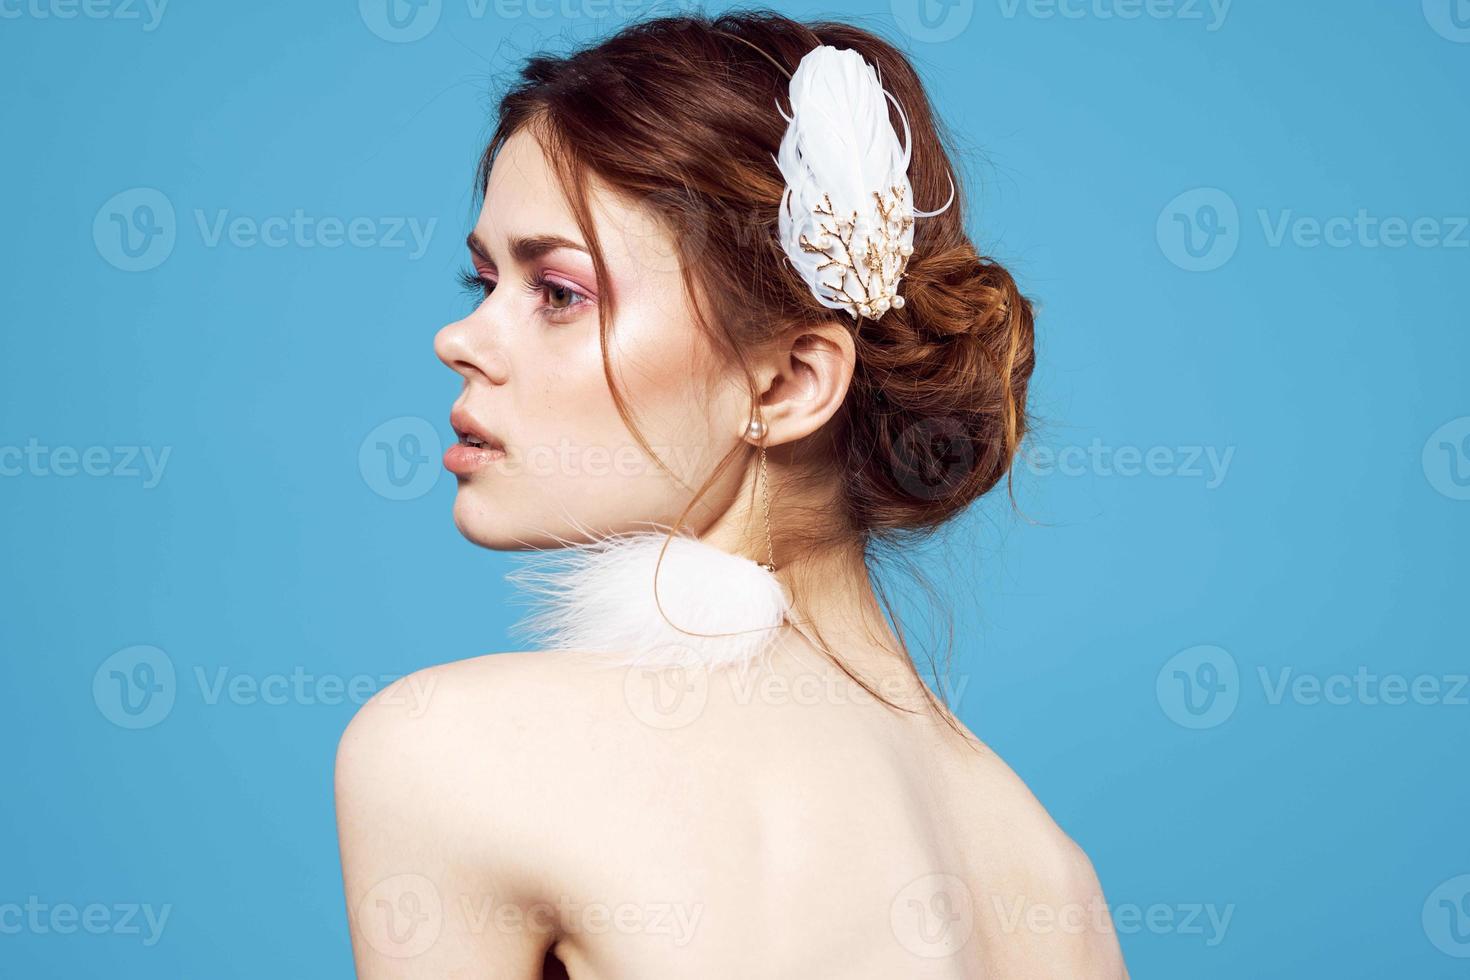 pretty woman naked shoulders cosmetics clean skin model photo